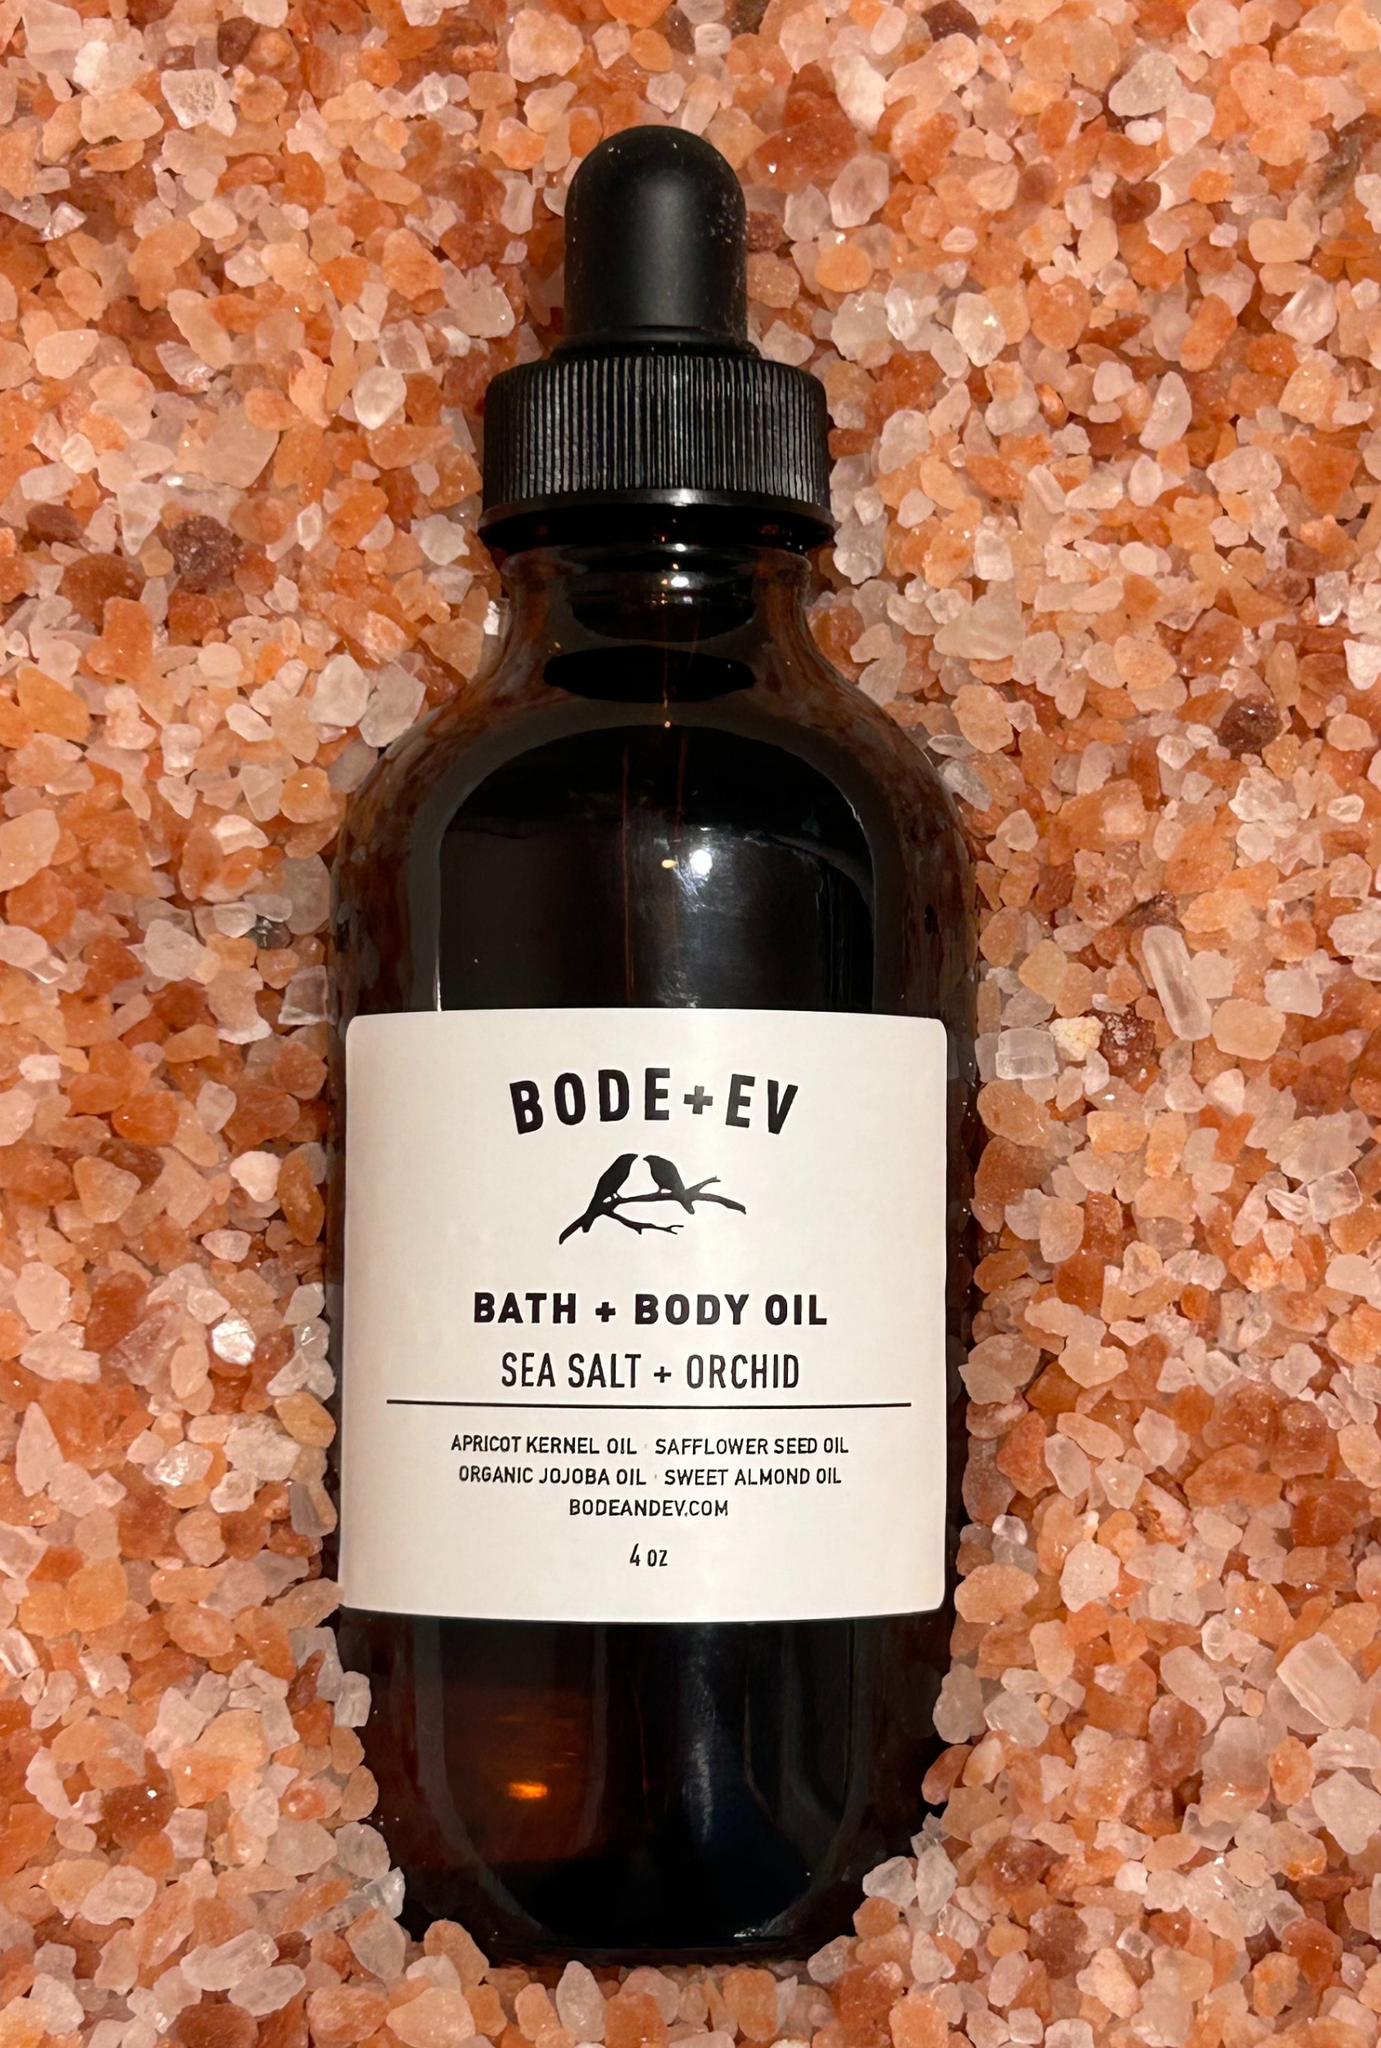 Sea Salt + Orchid Bath + Body Oil